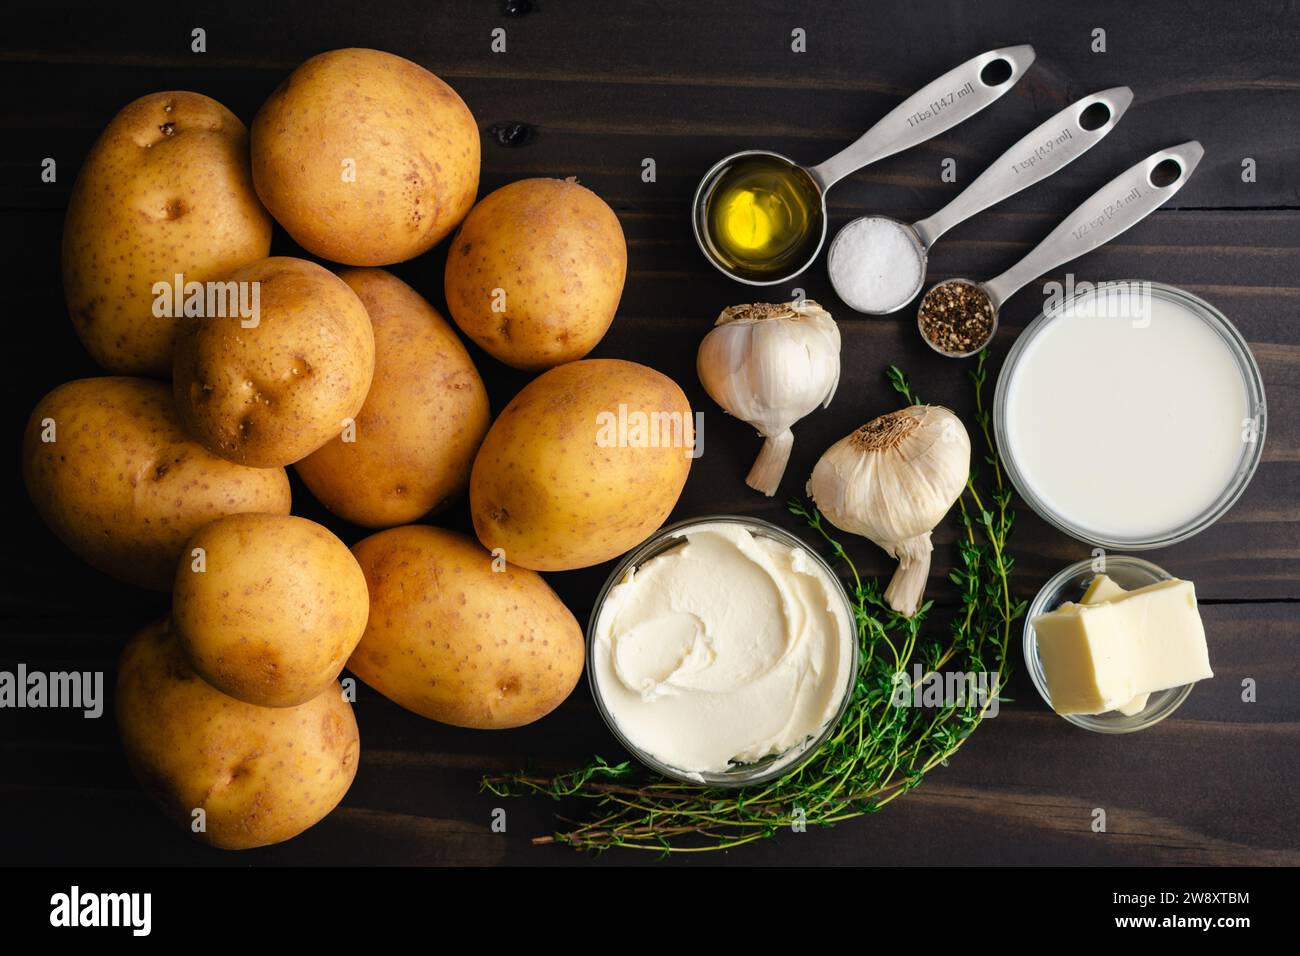 Roasted Garlic Mascarpone Mashed Potatoes Ingredients: Yukon gold potatoes, mascarpone cheese, fresh garlic, and other raw ingredients for a side dish Stock Photo